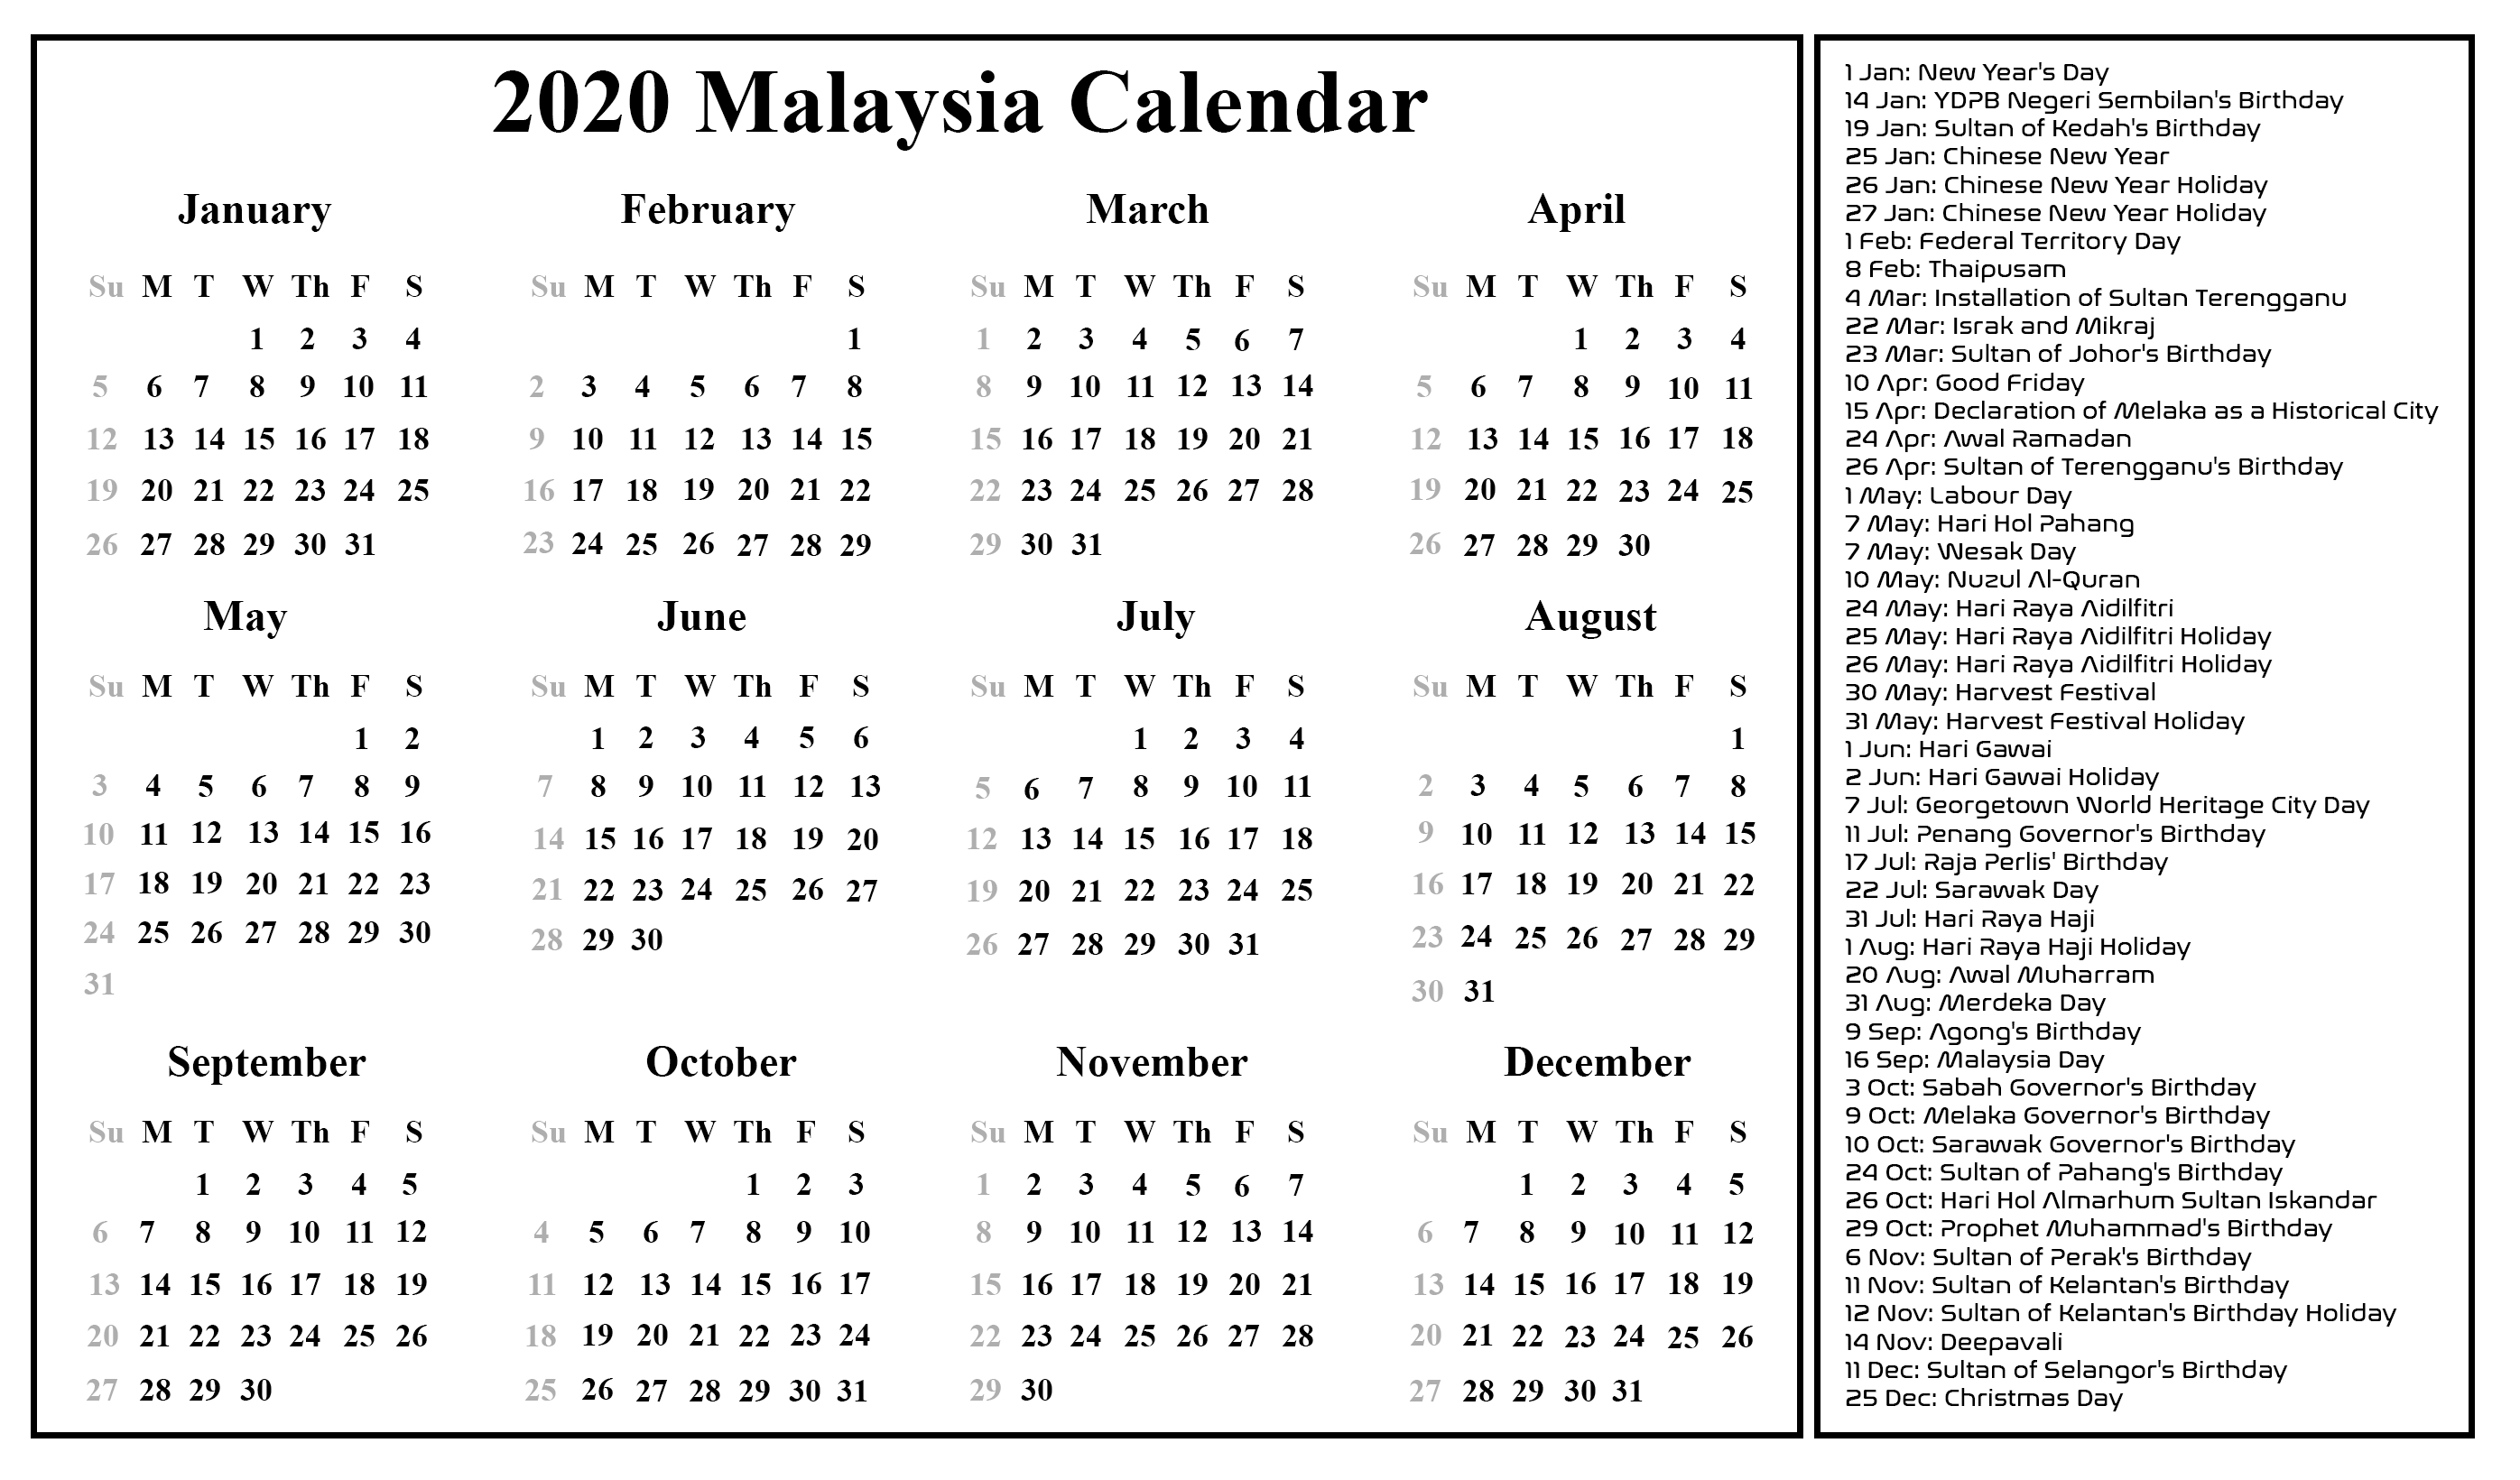 Public Holiday 2020 Sarawak  Sarawak Day 2021, 2022 and 2023